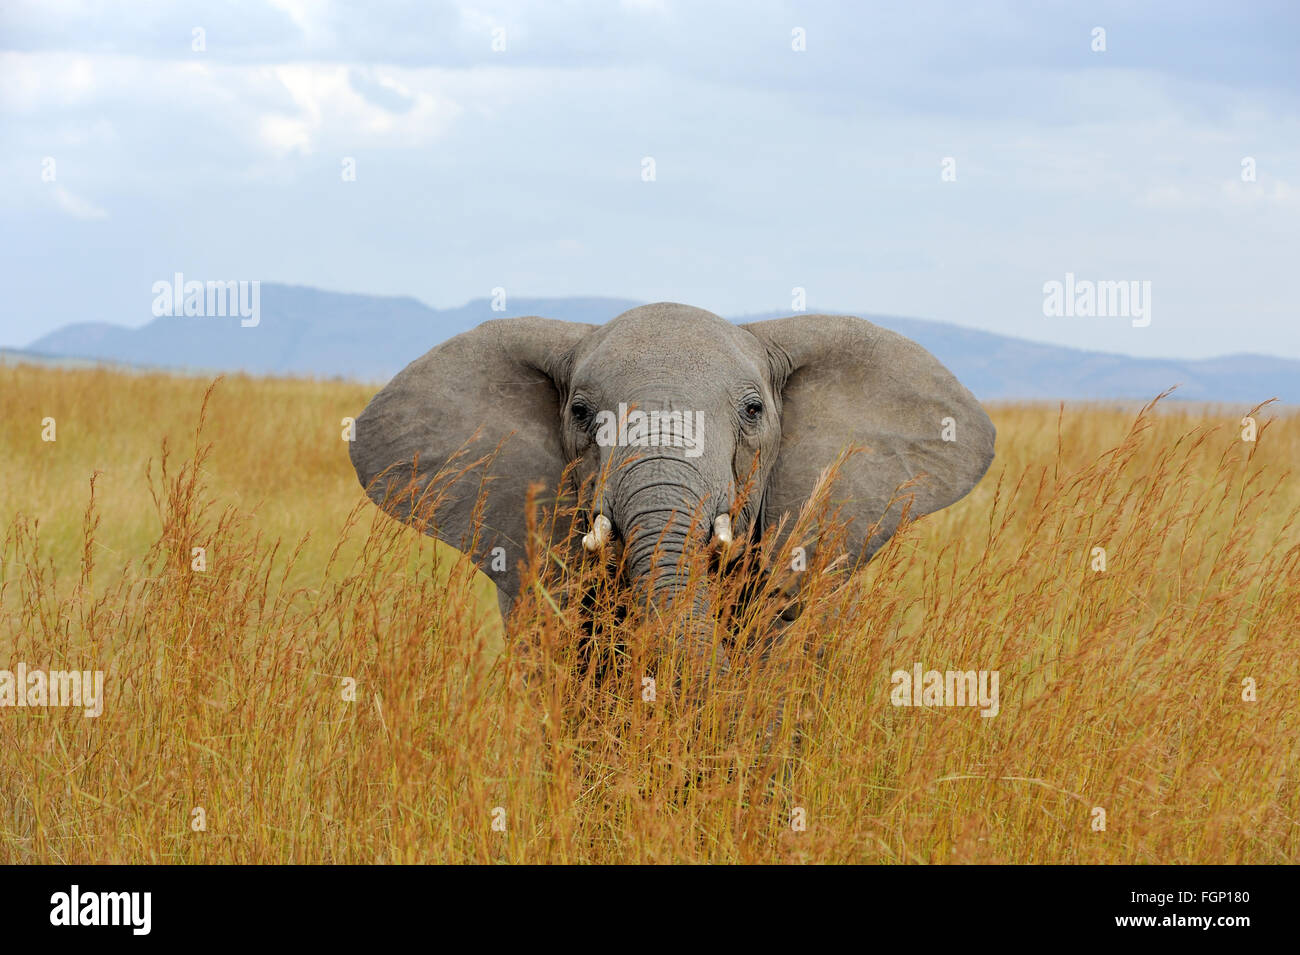 Big elephant in National park of Kenya, Africa Stock Photo